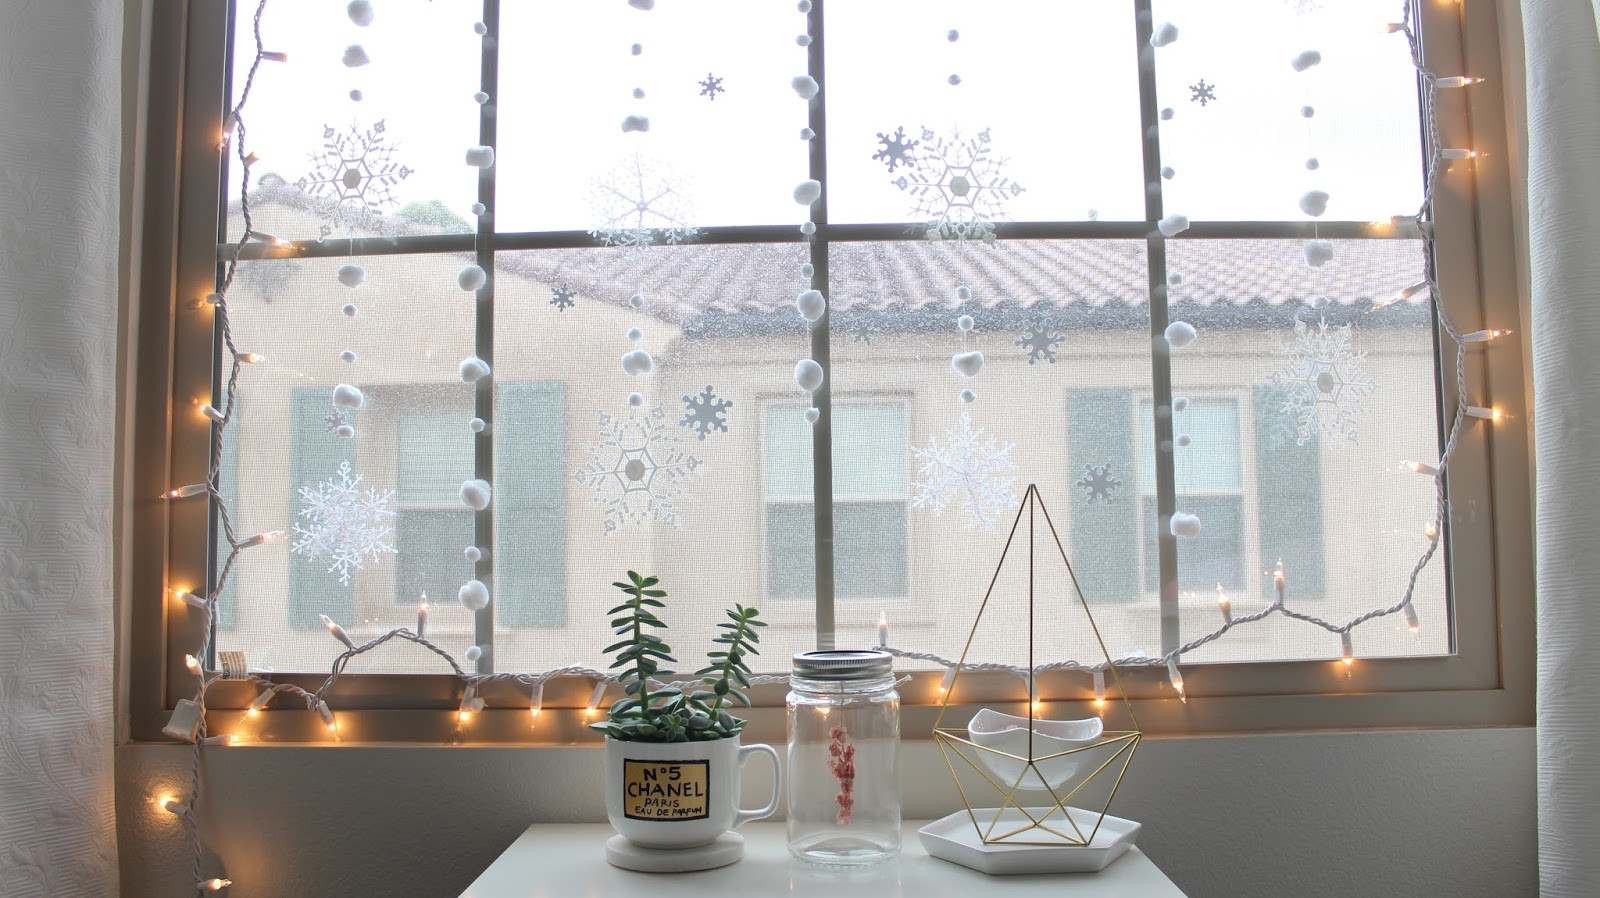 DIY Christmas Window Decorations
 DIY Room Decor